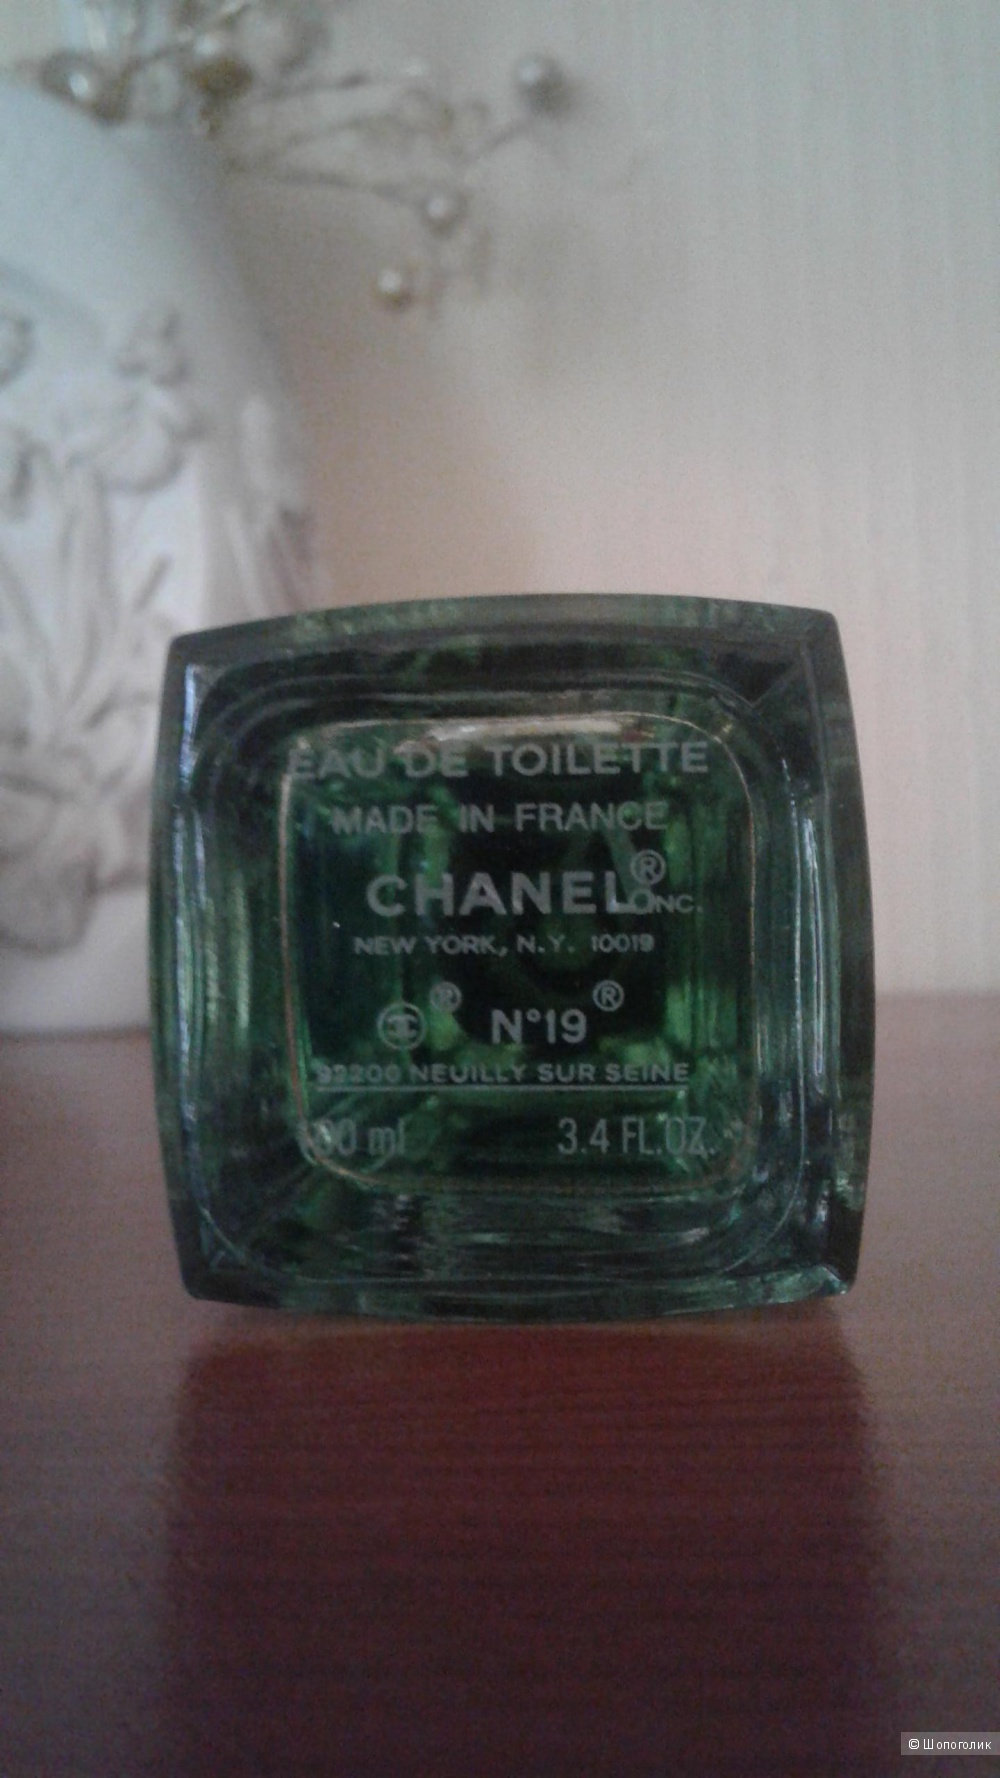 Chanel 19 оригинальный тестер 100мл.